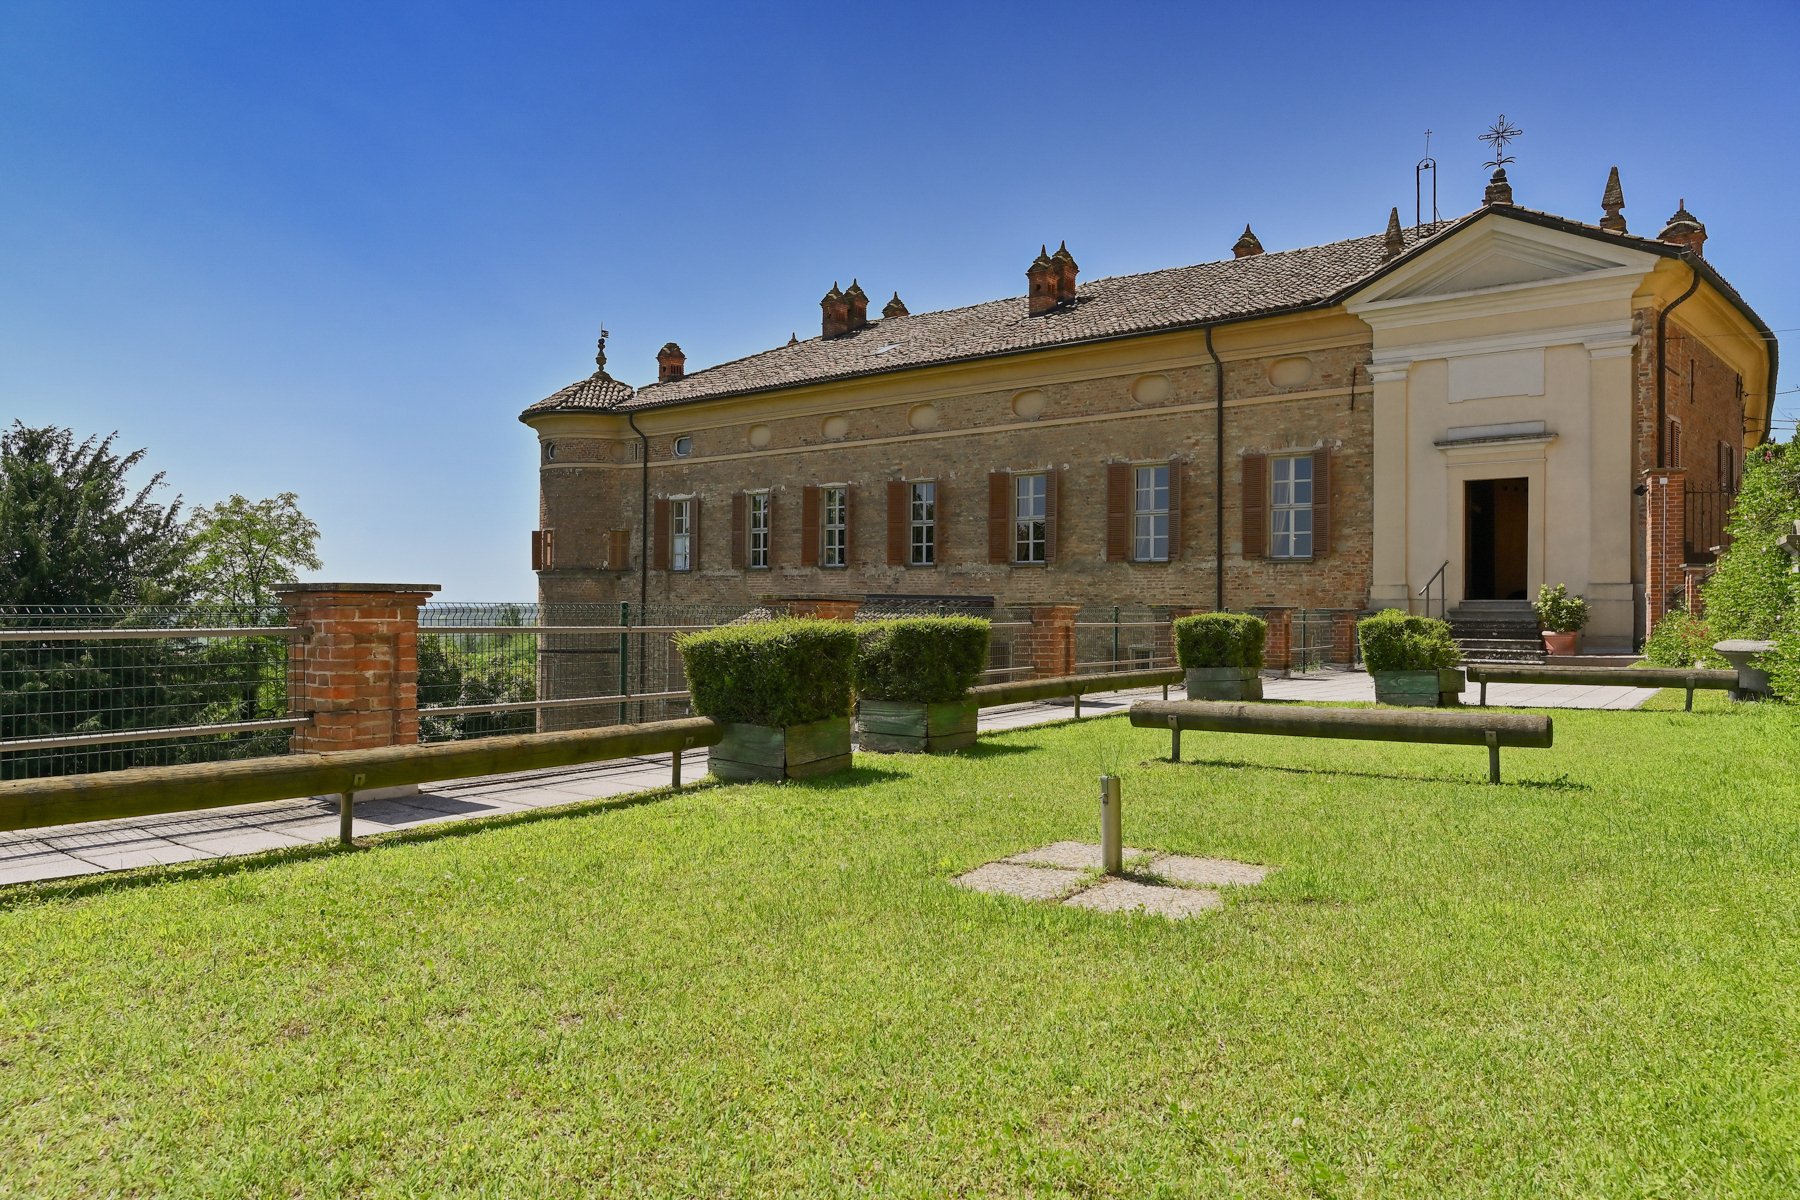 Francis York Castello di RInco Luxury Apartments in a 17th Century Castle in Piedmont, Italy 18.jpg